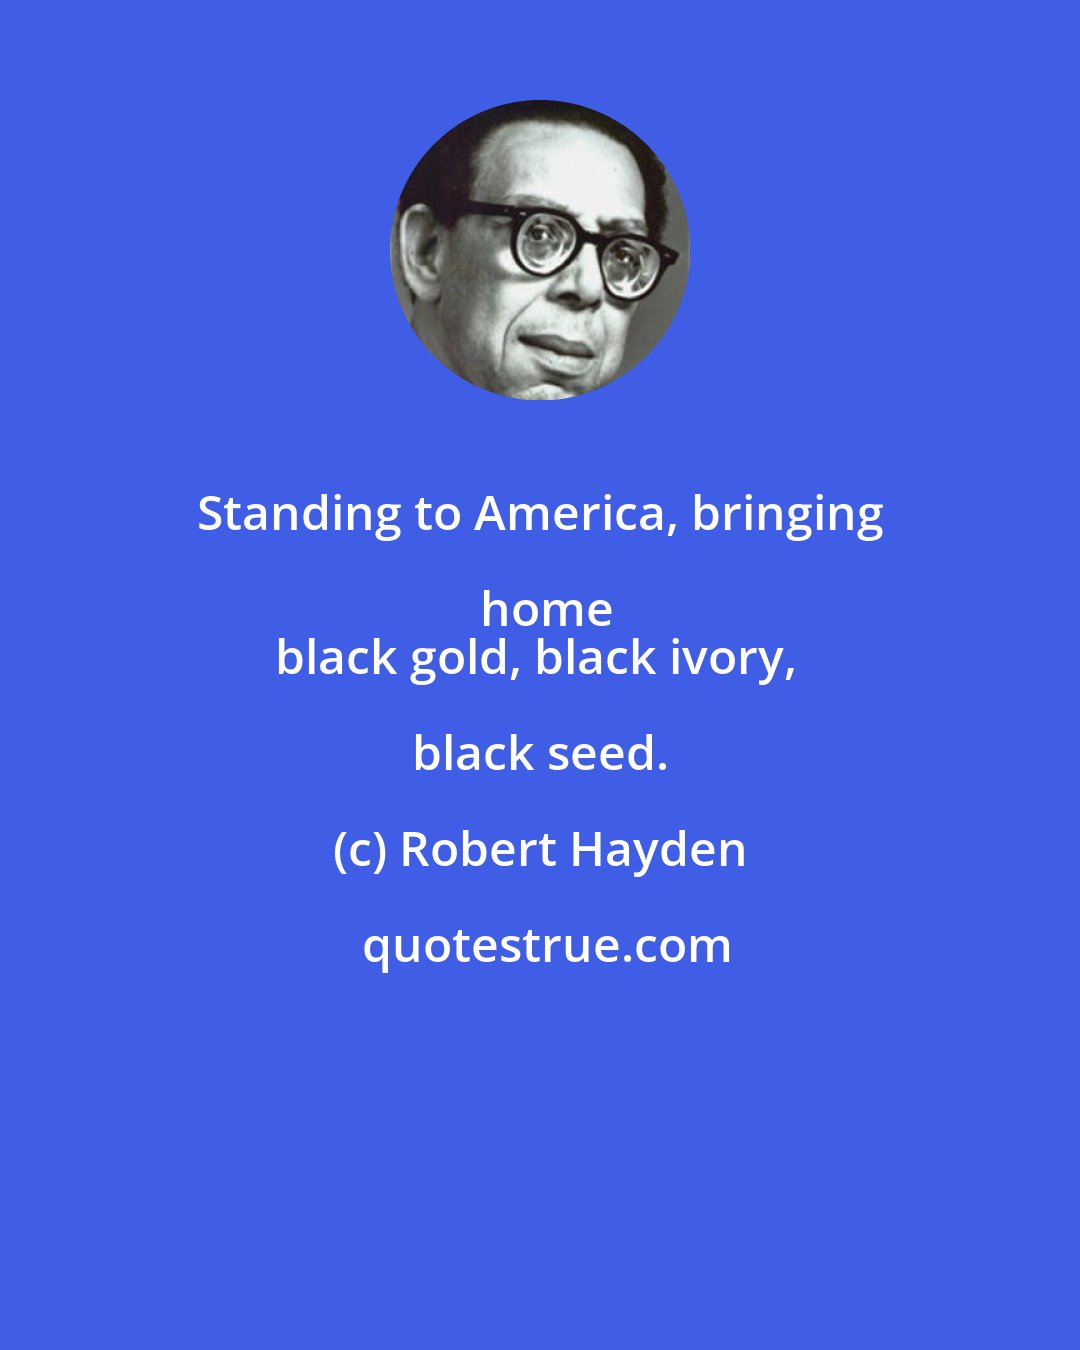 Robert Hayden: Standing to America, bringing home
black gold, black ivory, black seed.